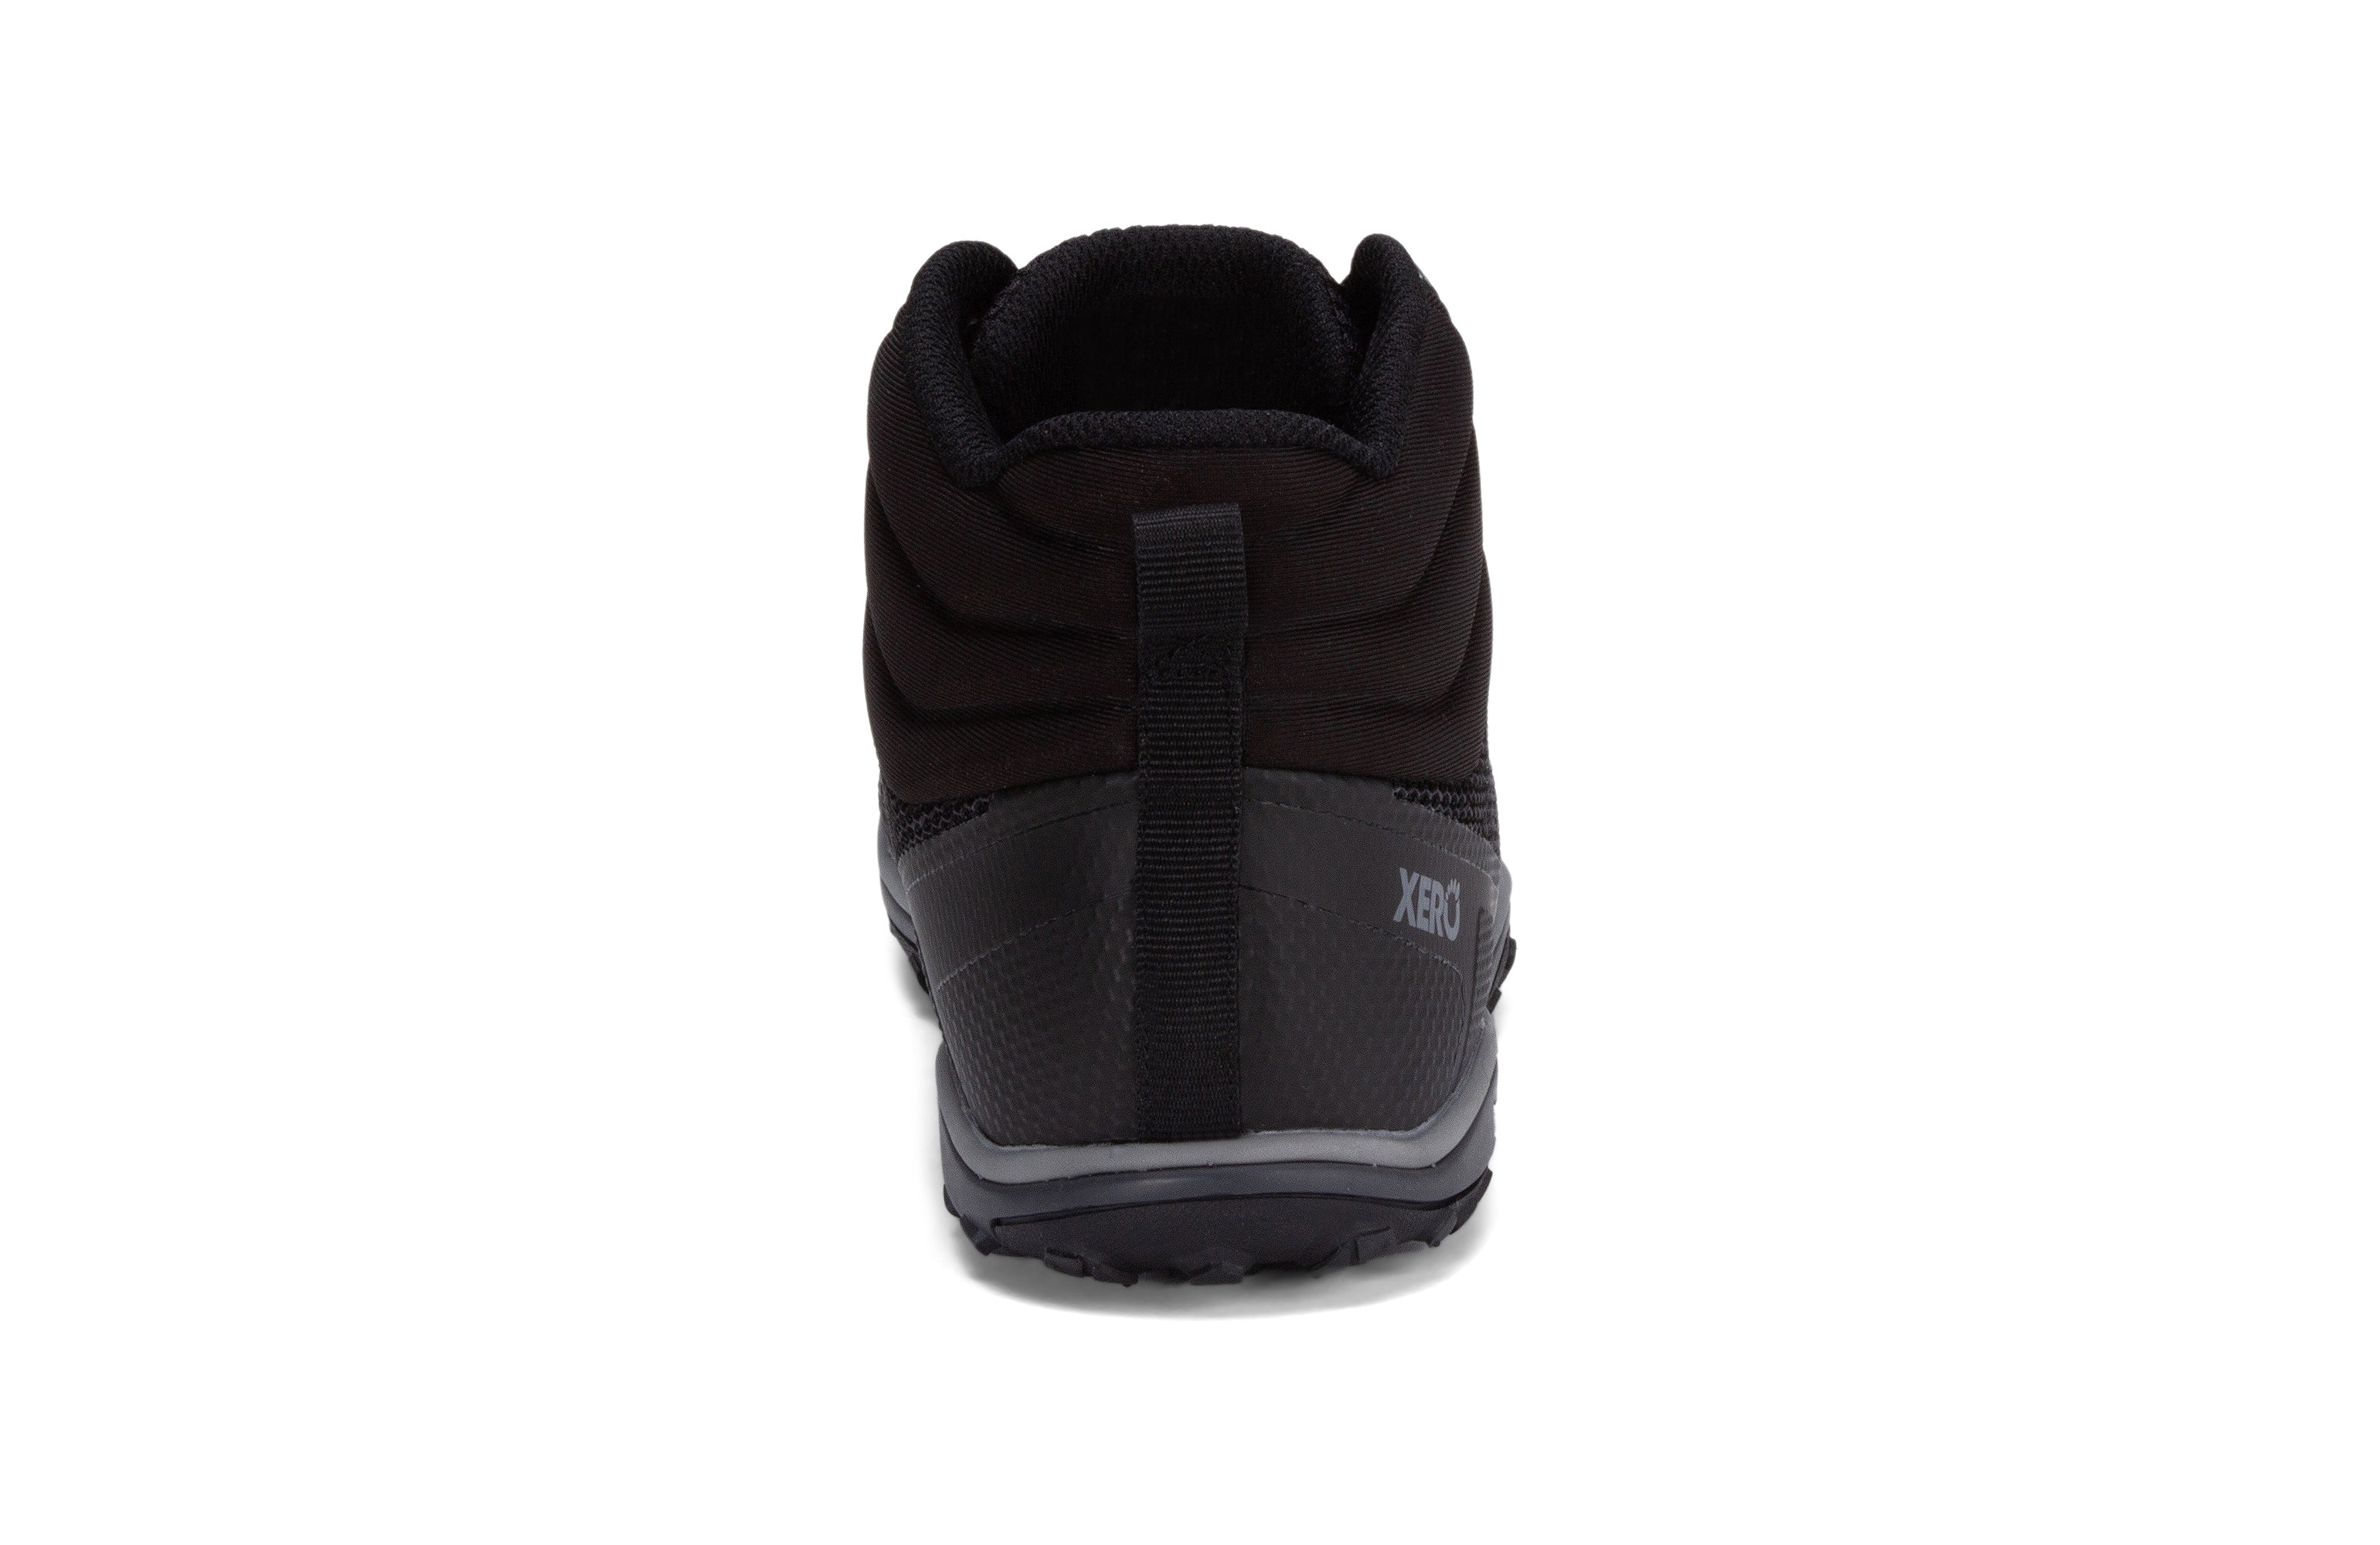 Xero Shoes Scrambler Mid Mens barfods lette vandrestøvler til mænd i farven black, bagfra